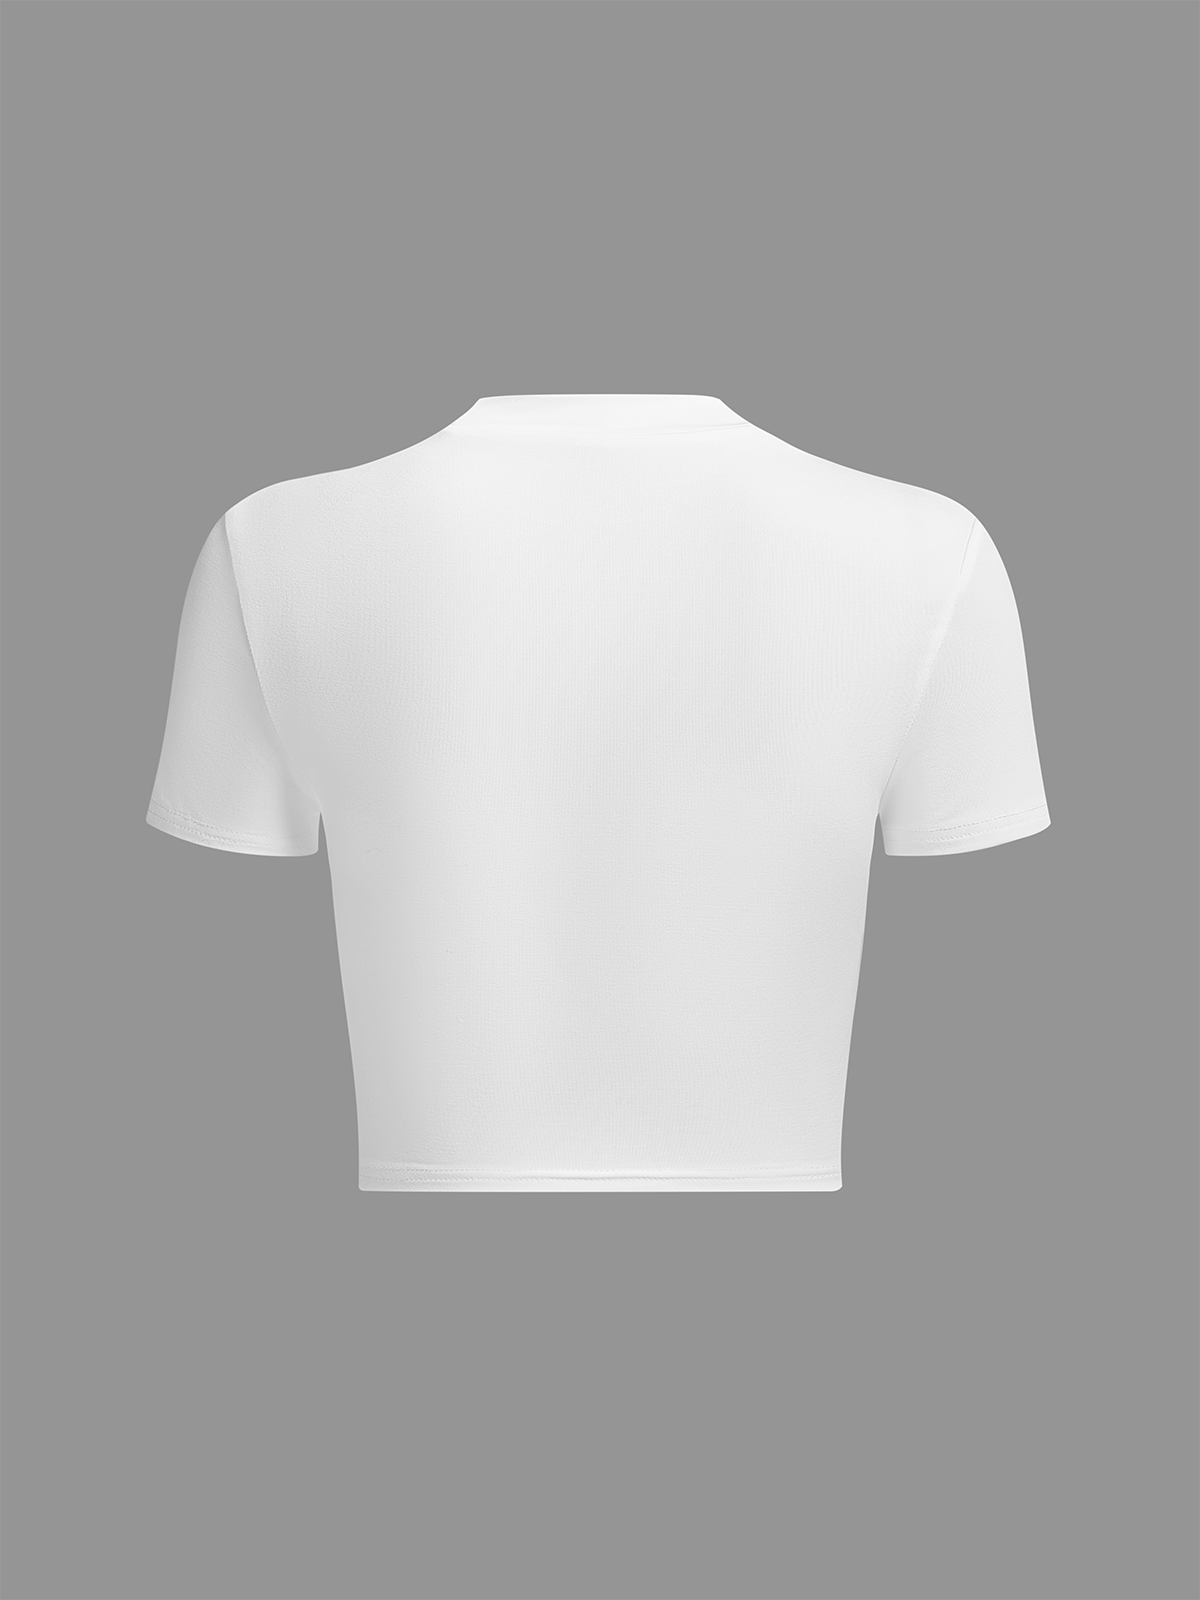 Crew Neck Plain Short Sleeve T-shirt